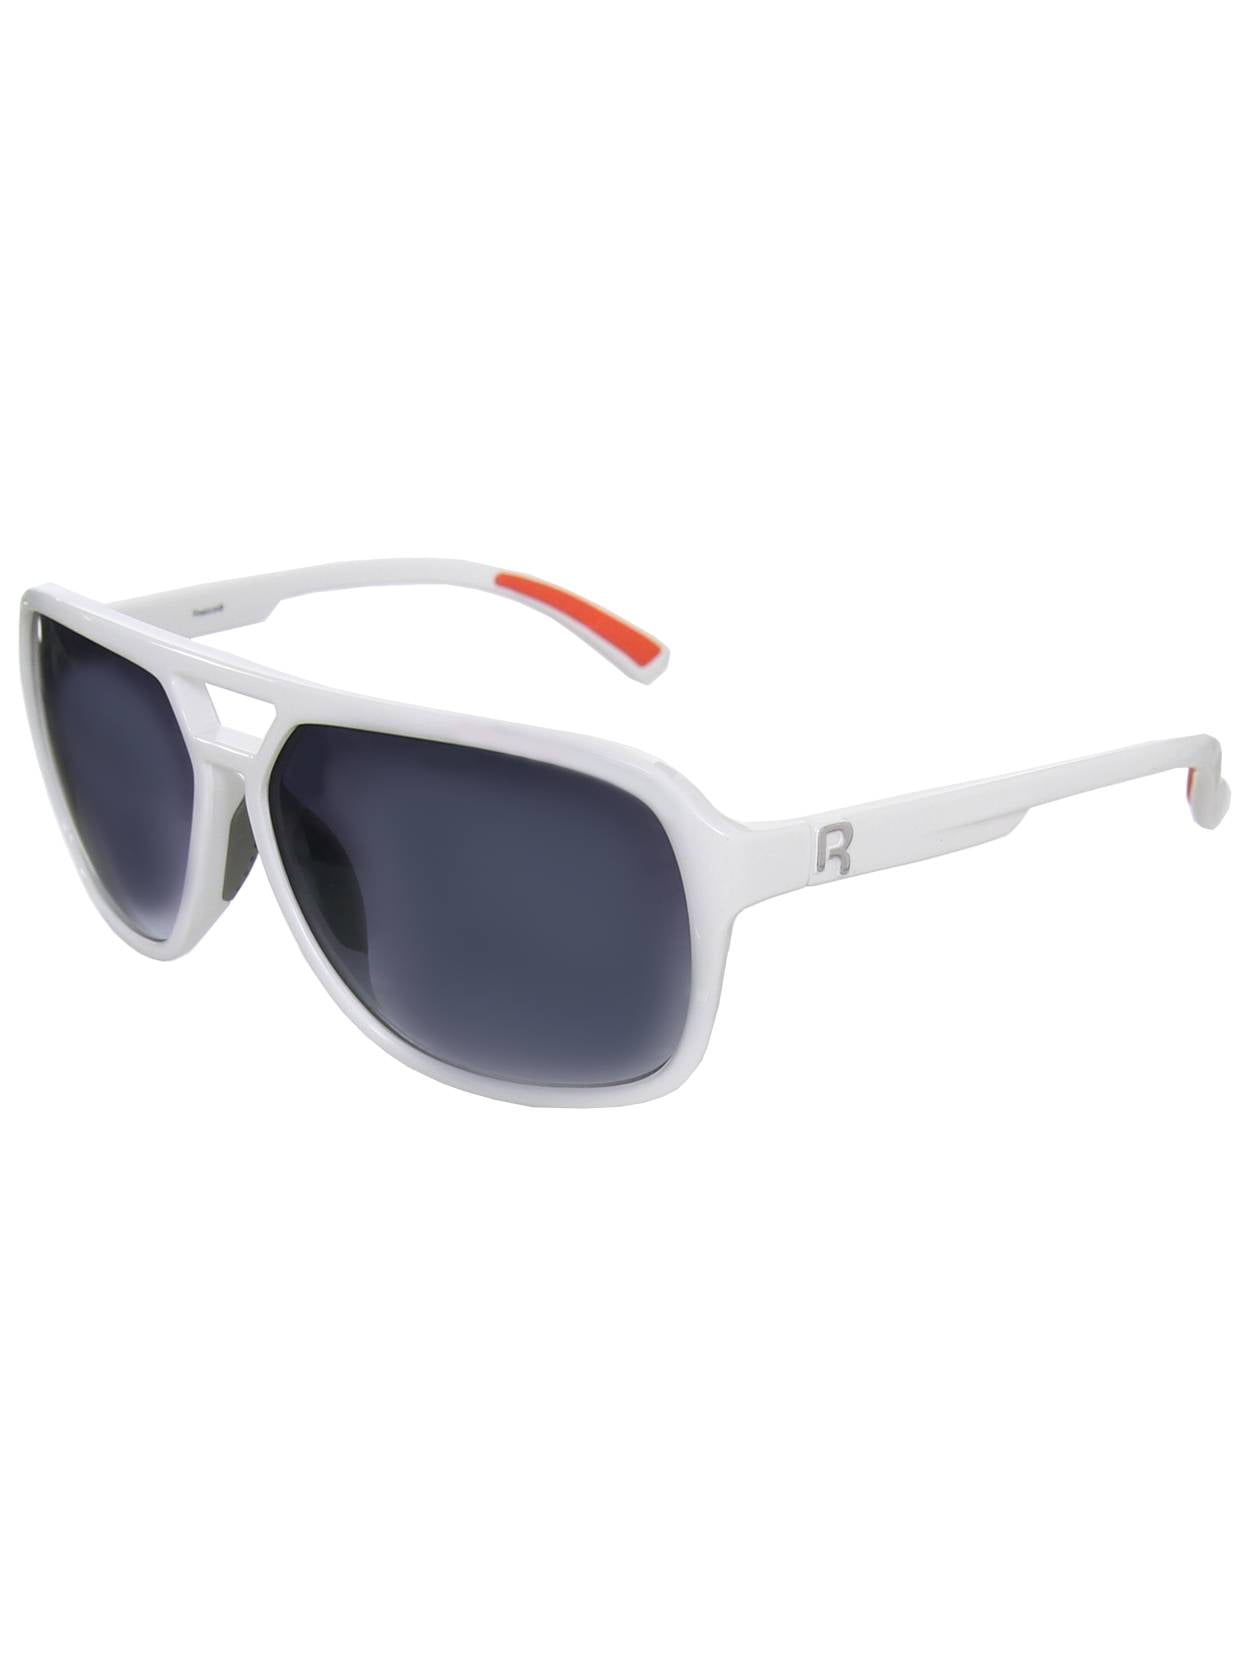 reebok classic 3 white sunglasses